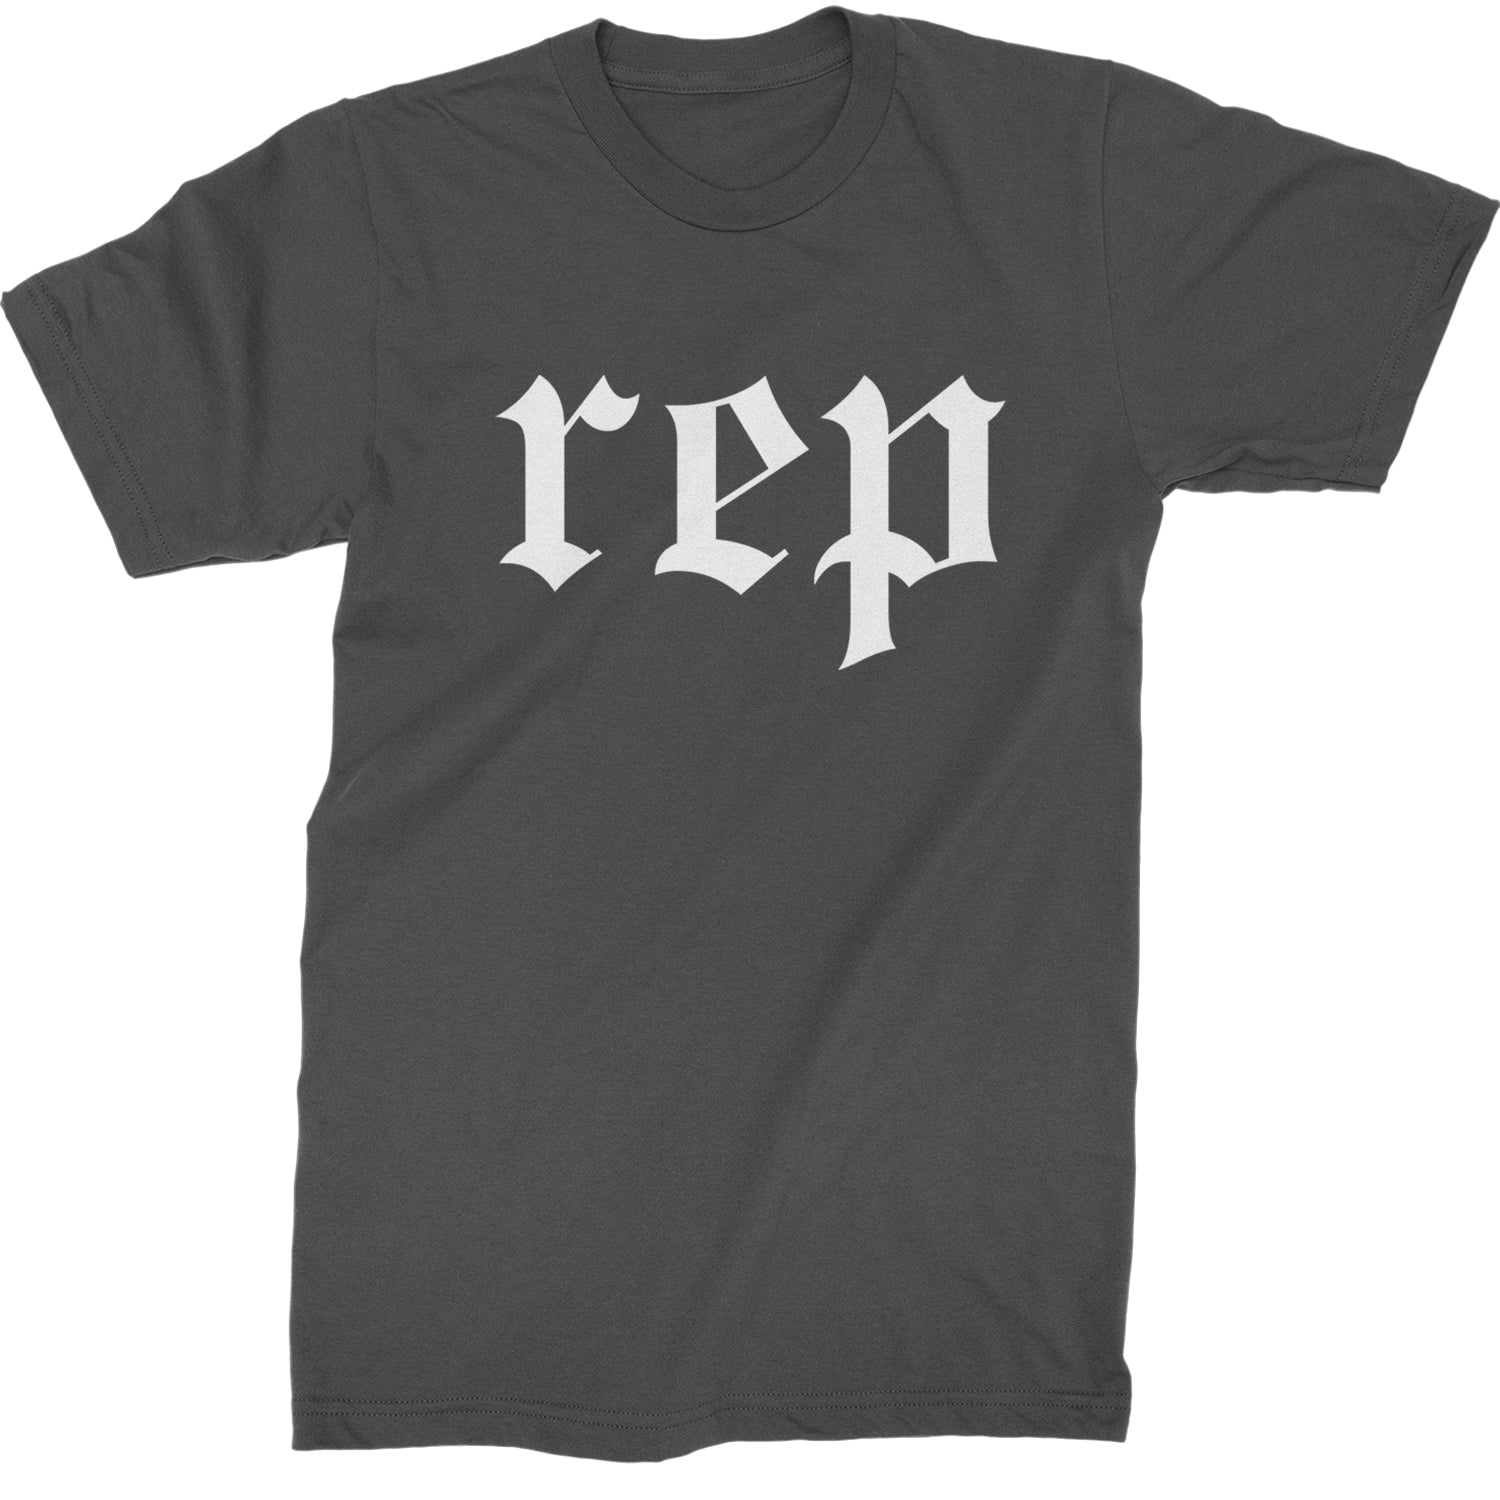 REP Reputation Eras Music Lover Gift Fan Favorite Mens T-shirt Charcoal Grey